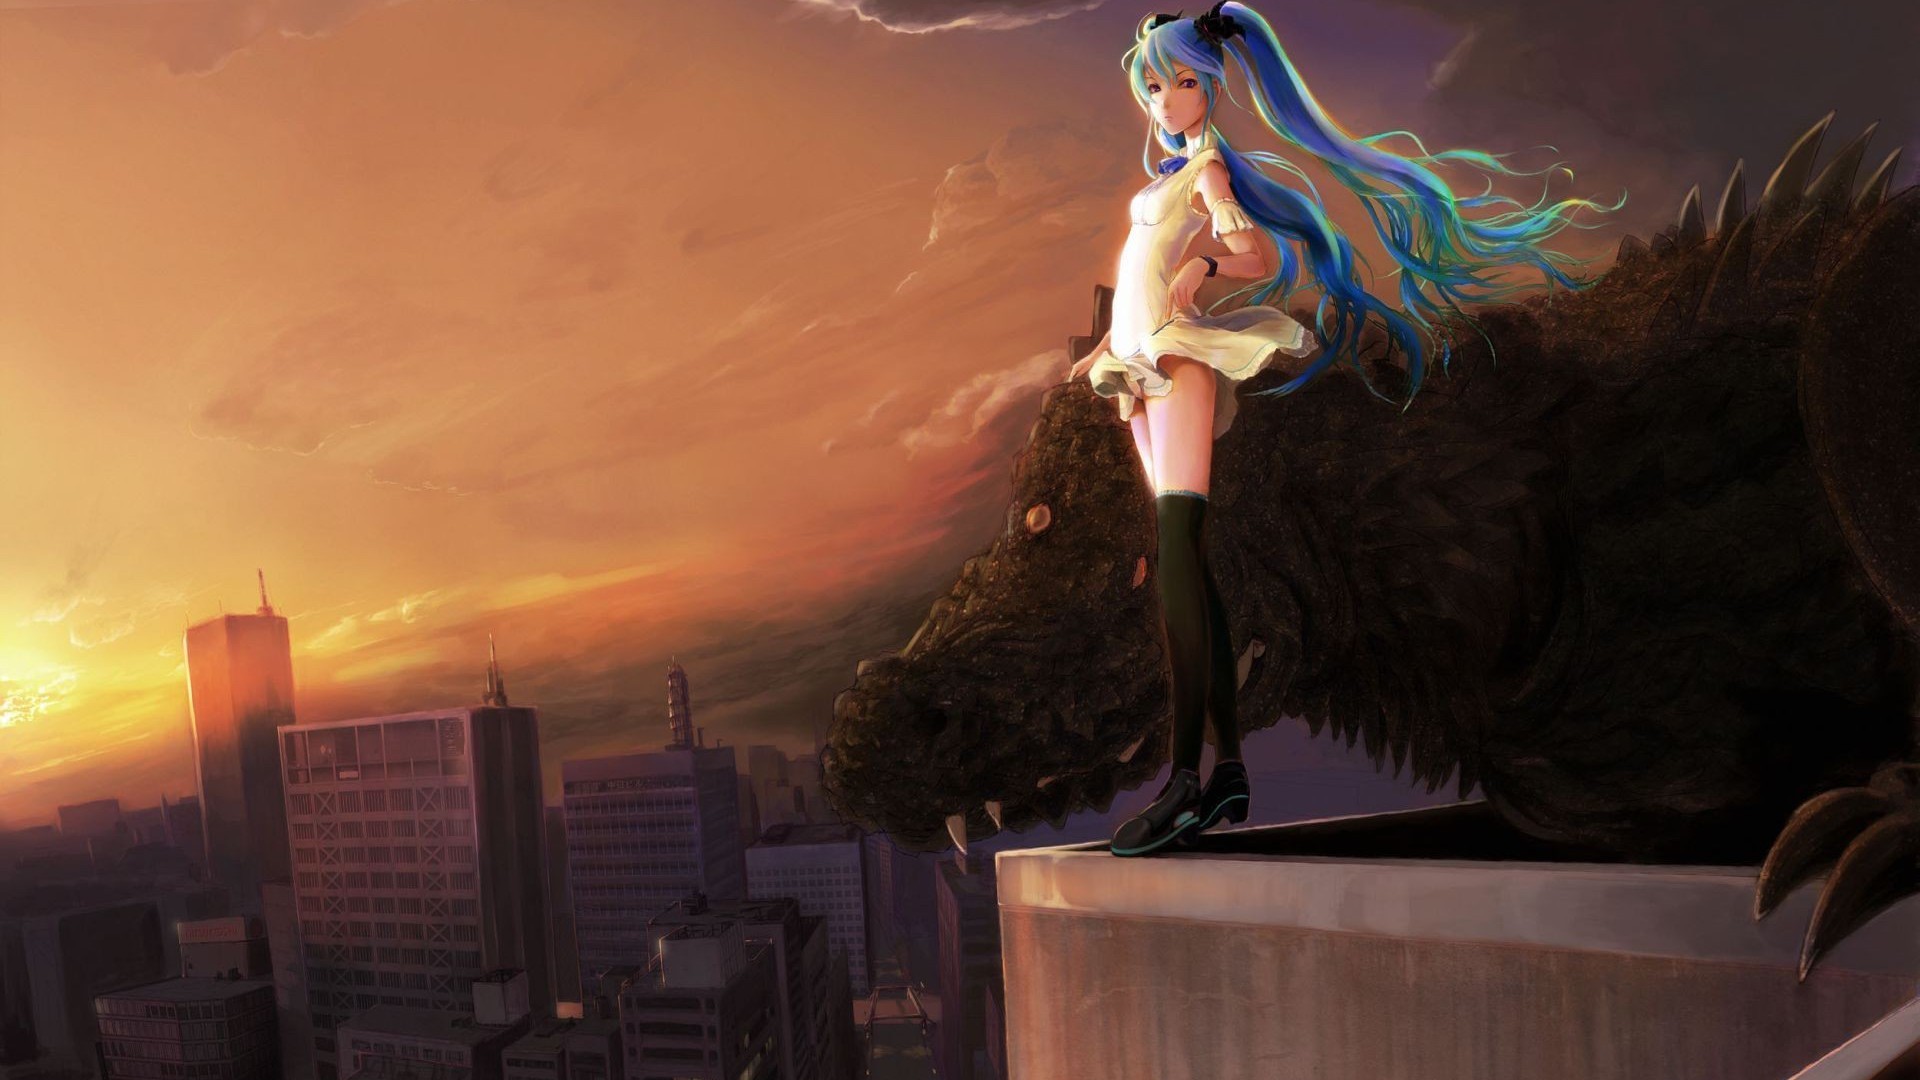 Anime 1920x1080 Hatsune Miku Vocaloid blue hair creature long hair anime girls anime standing cityscape looking at viewer sky sunlight socks black socks  OTK socks shoes